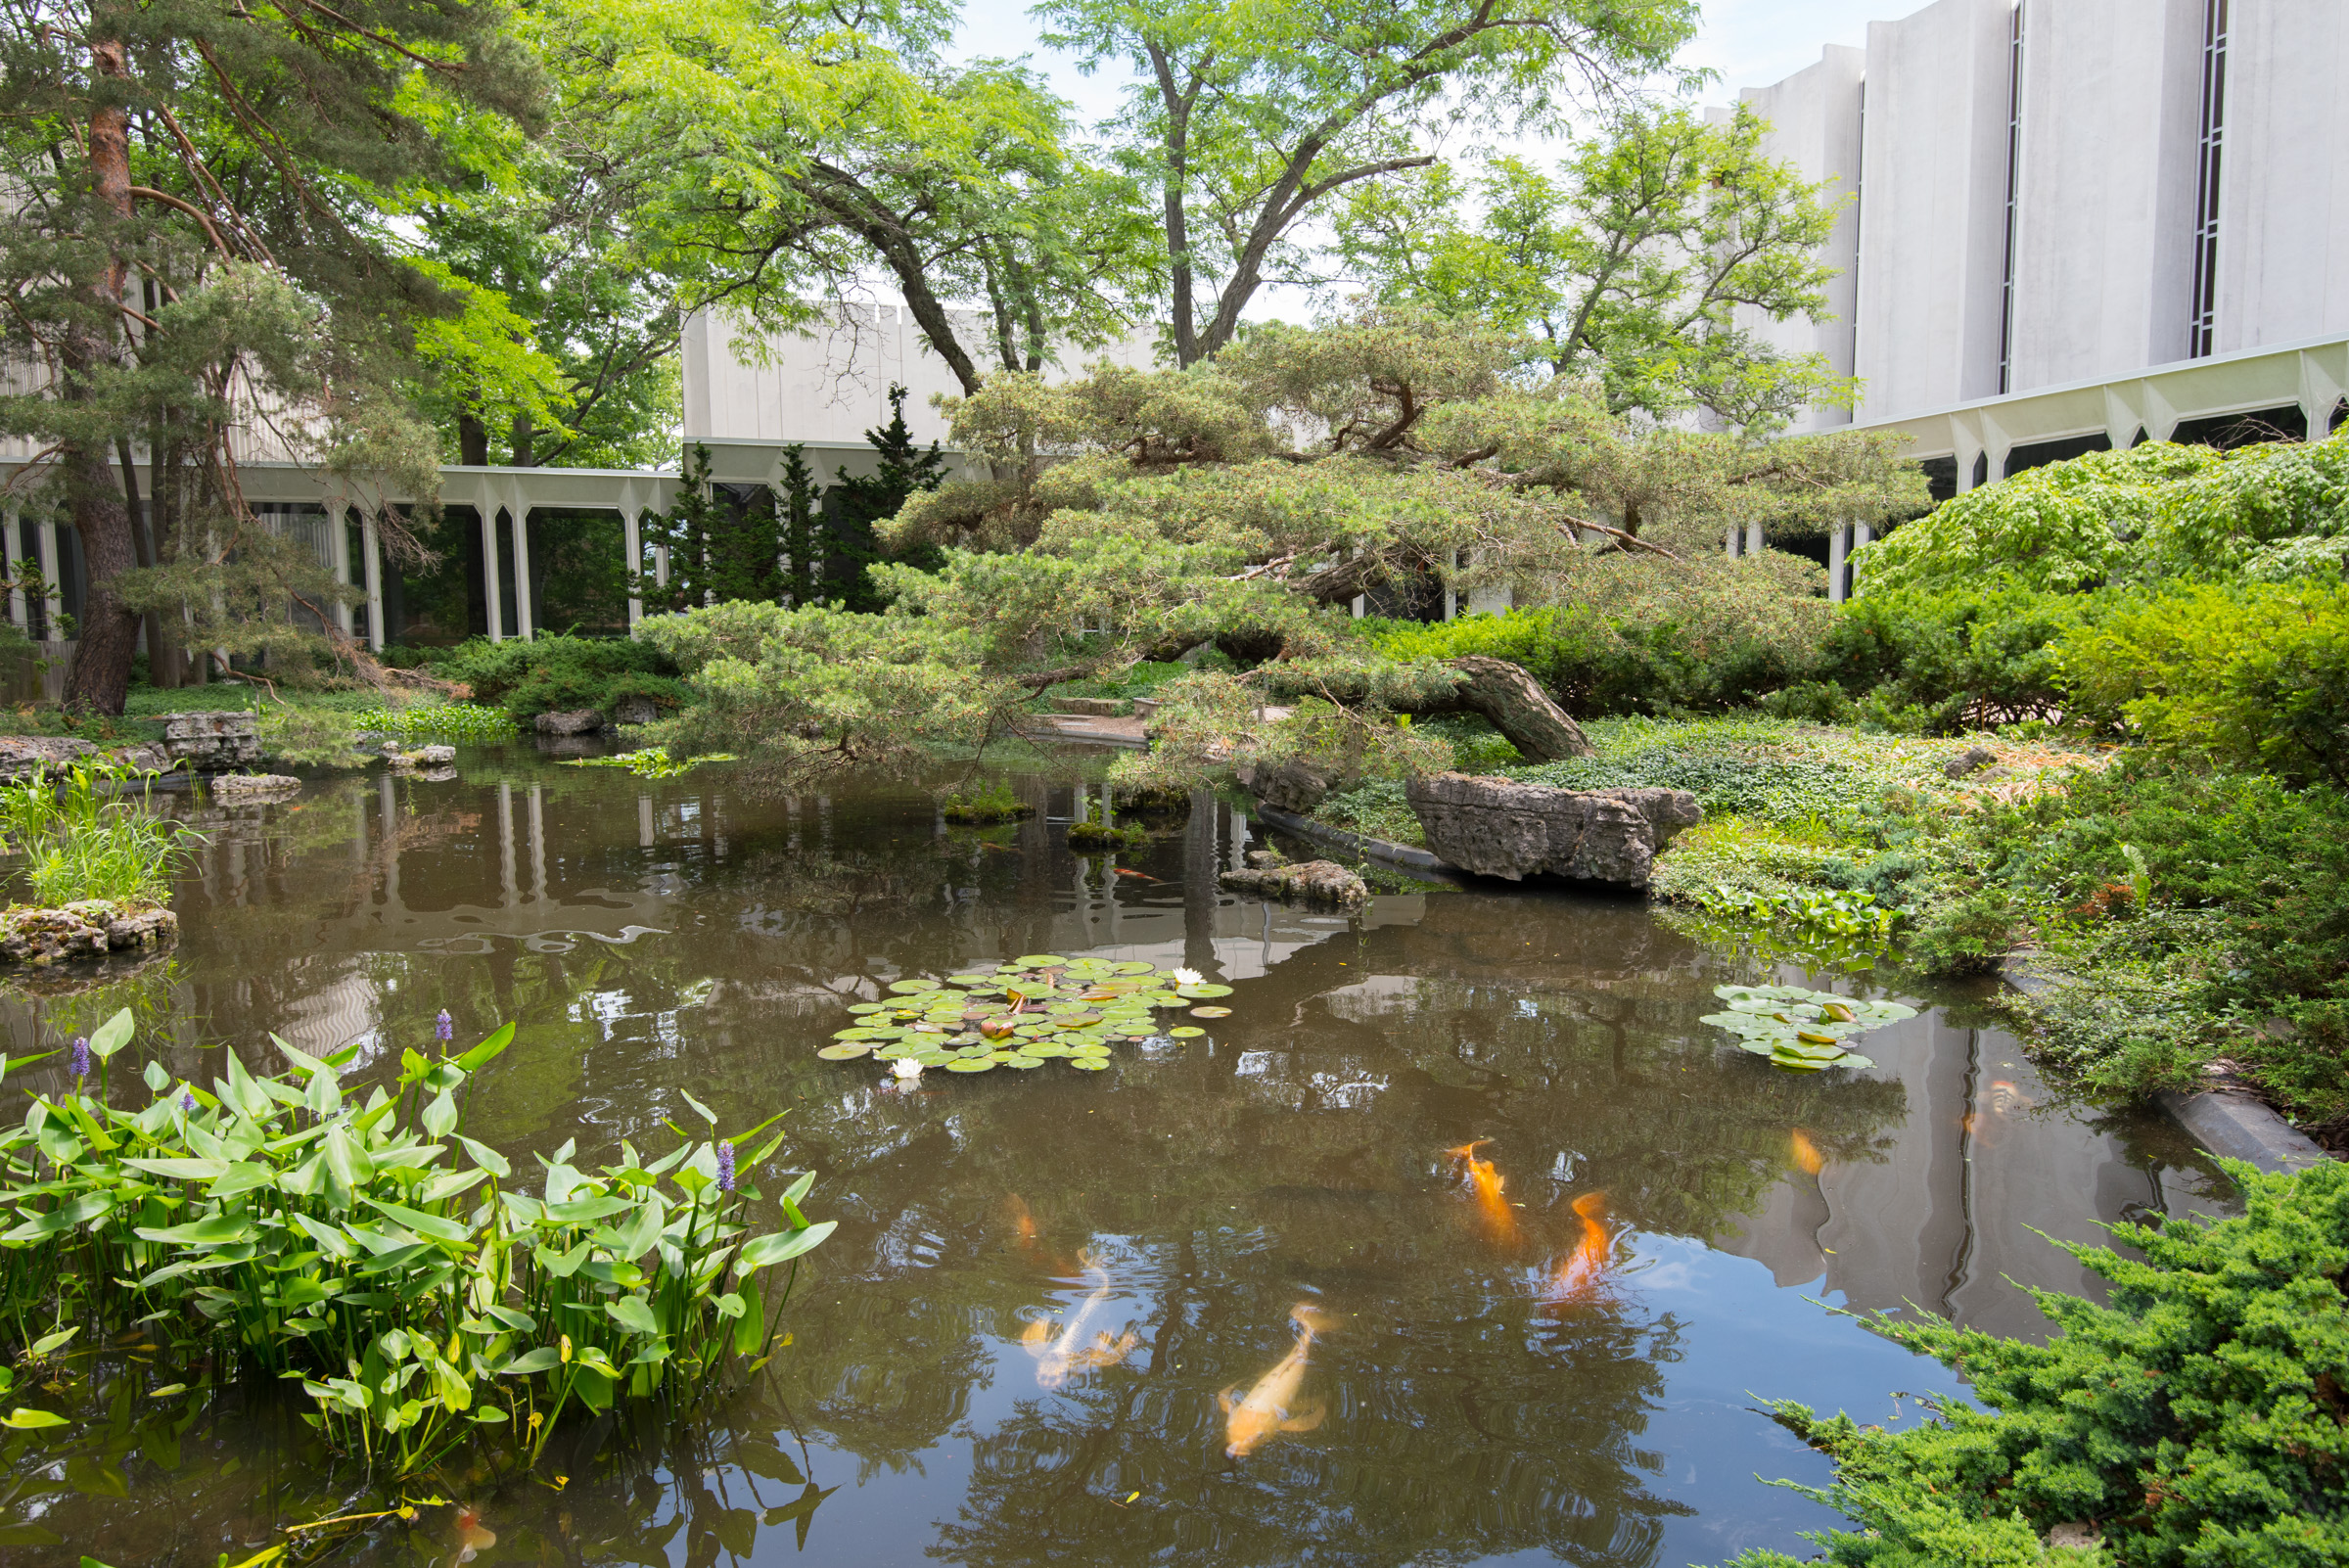 Reflection pond outside of Bibbins Hall